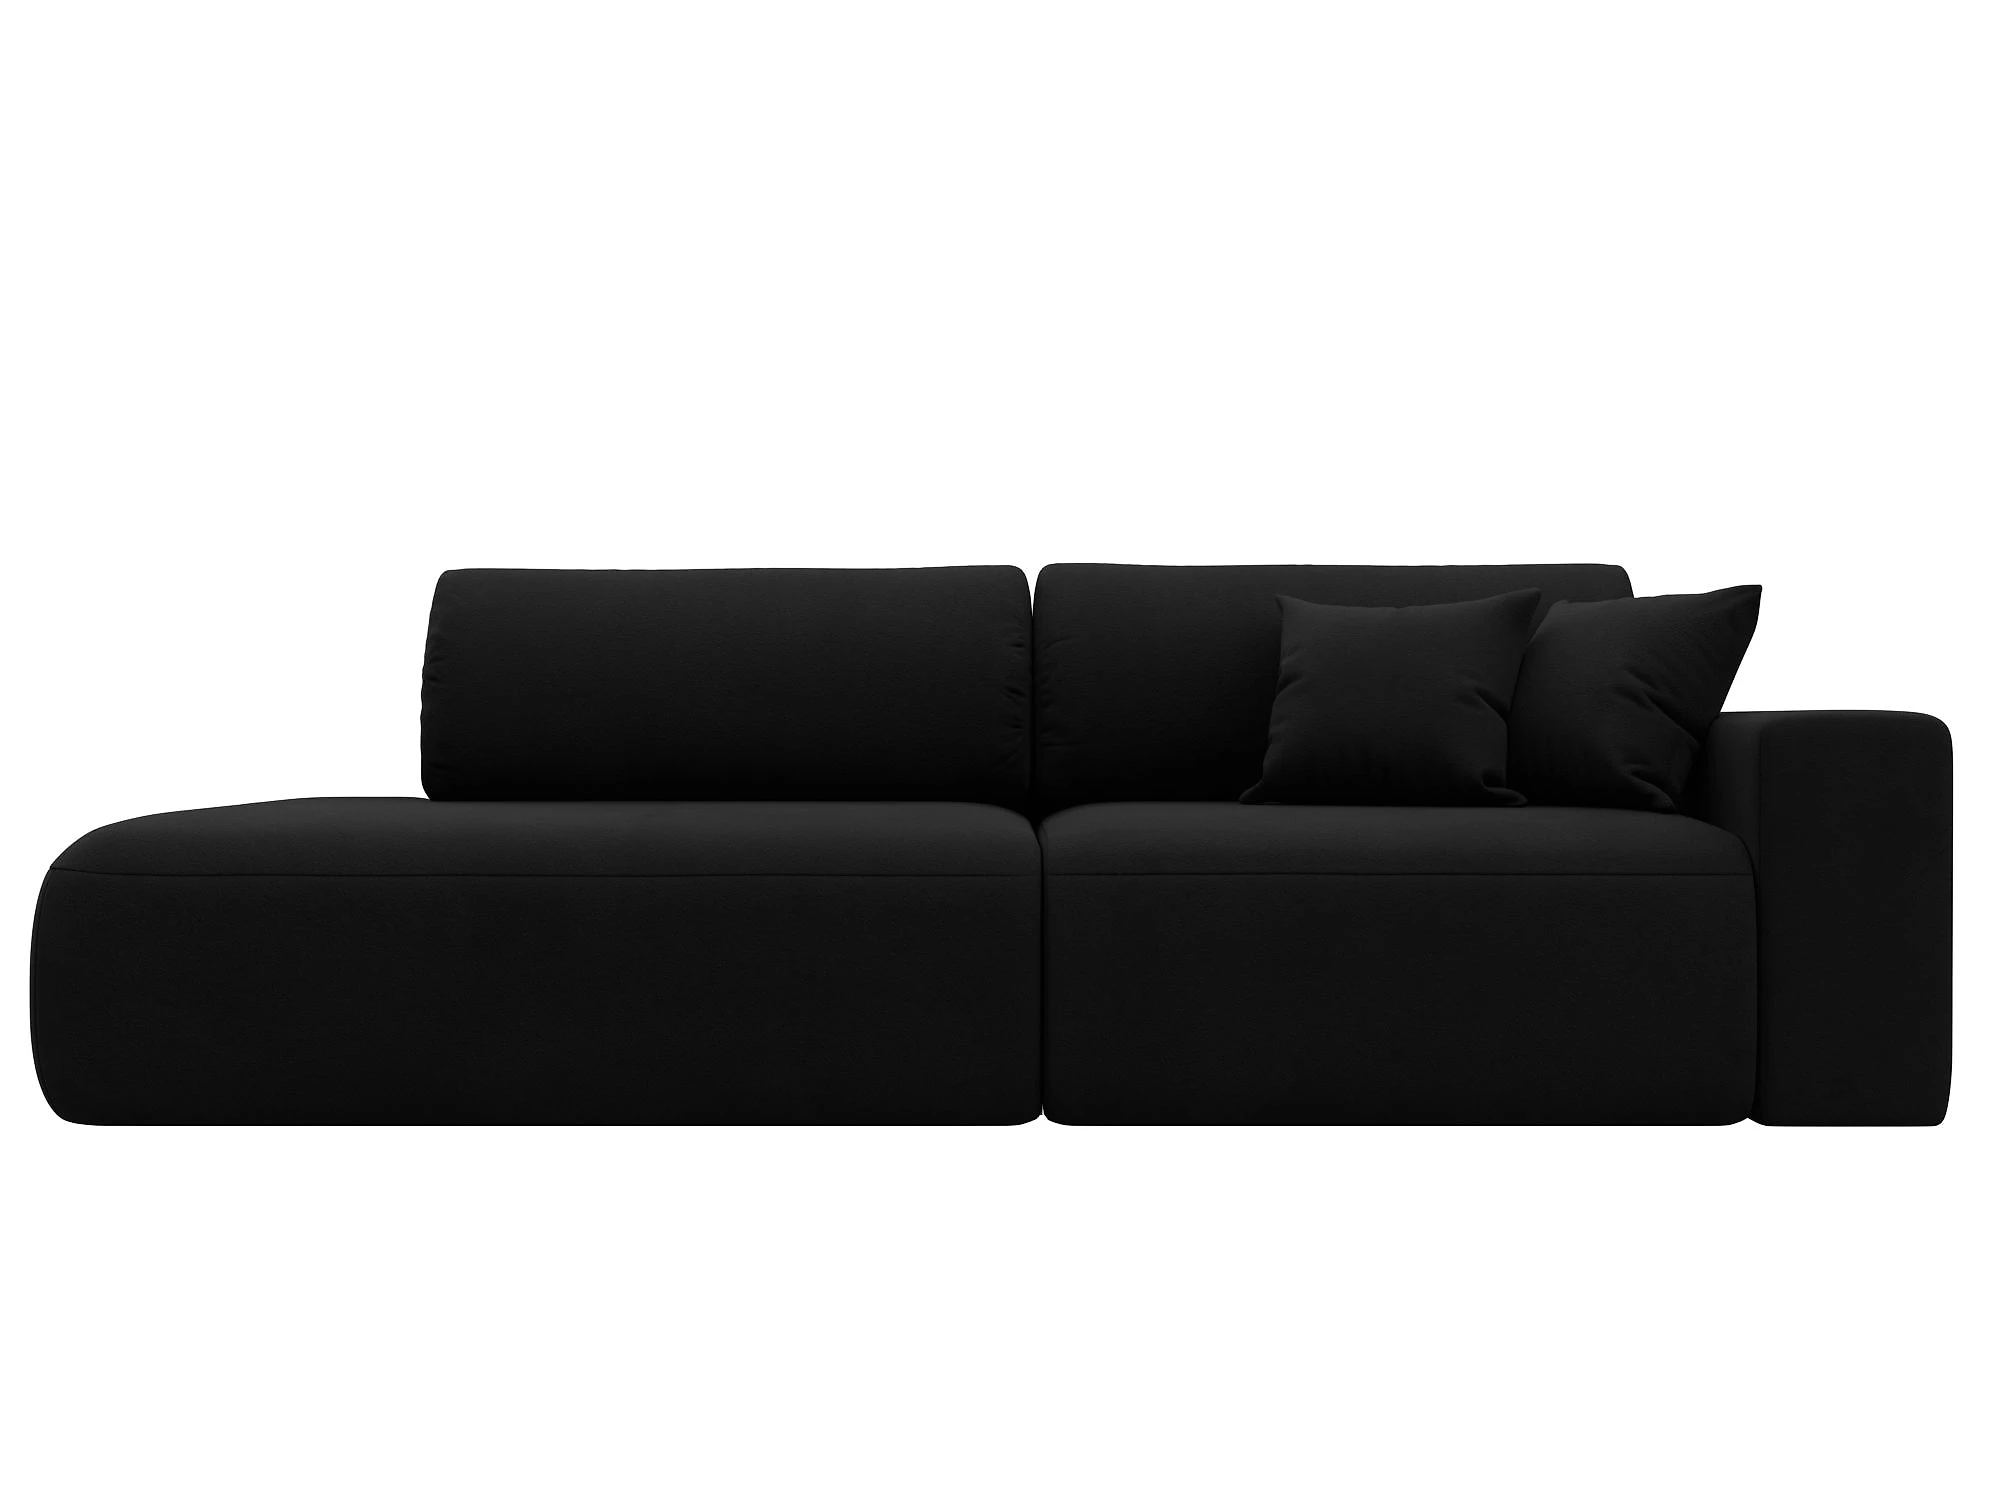 Чёрный диван Лига-036 Модерн Дизайн 2